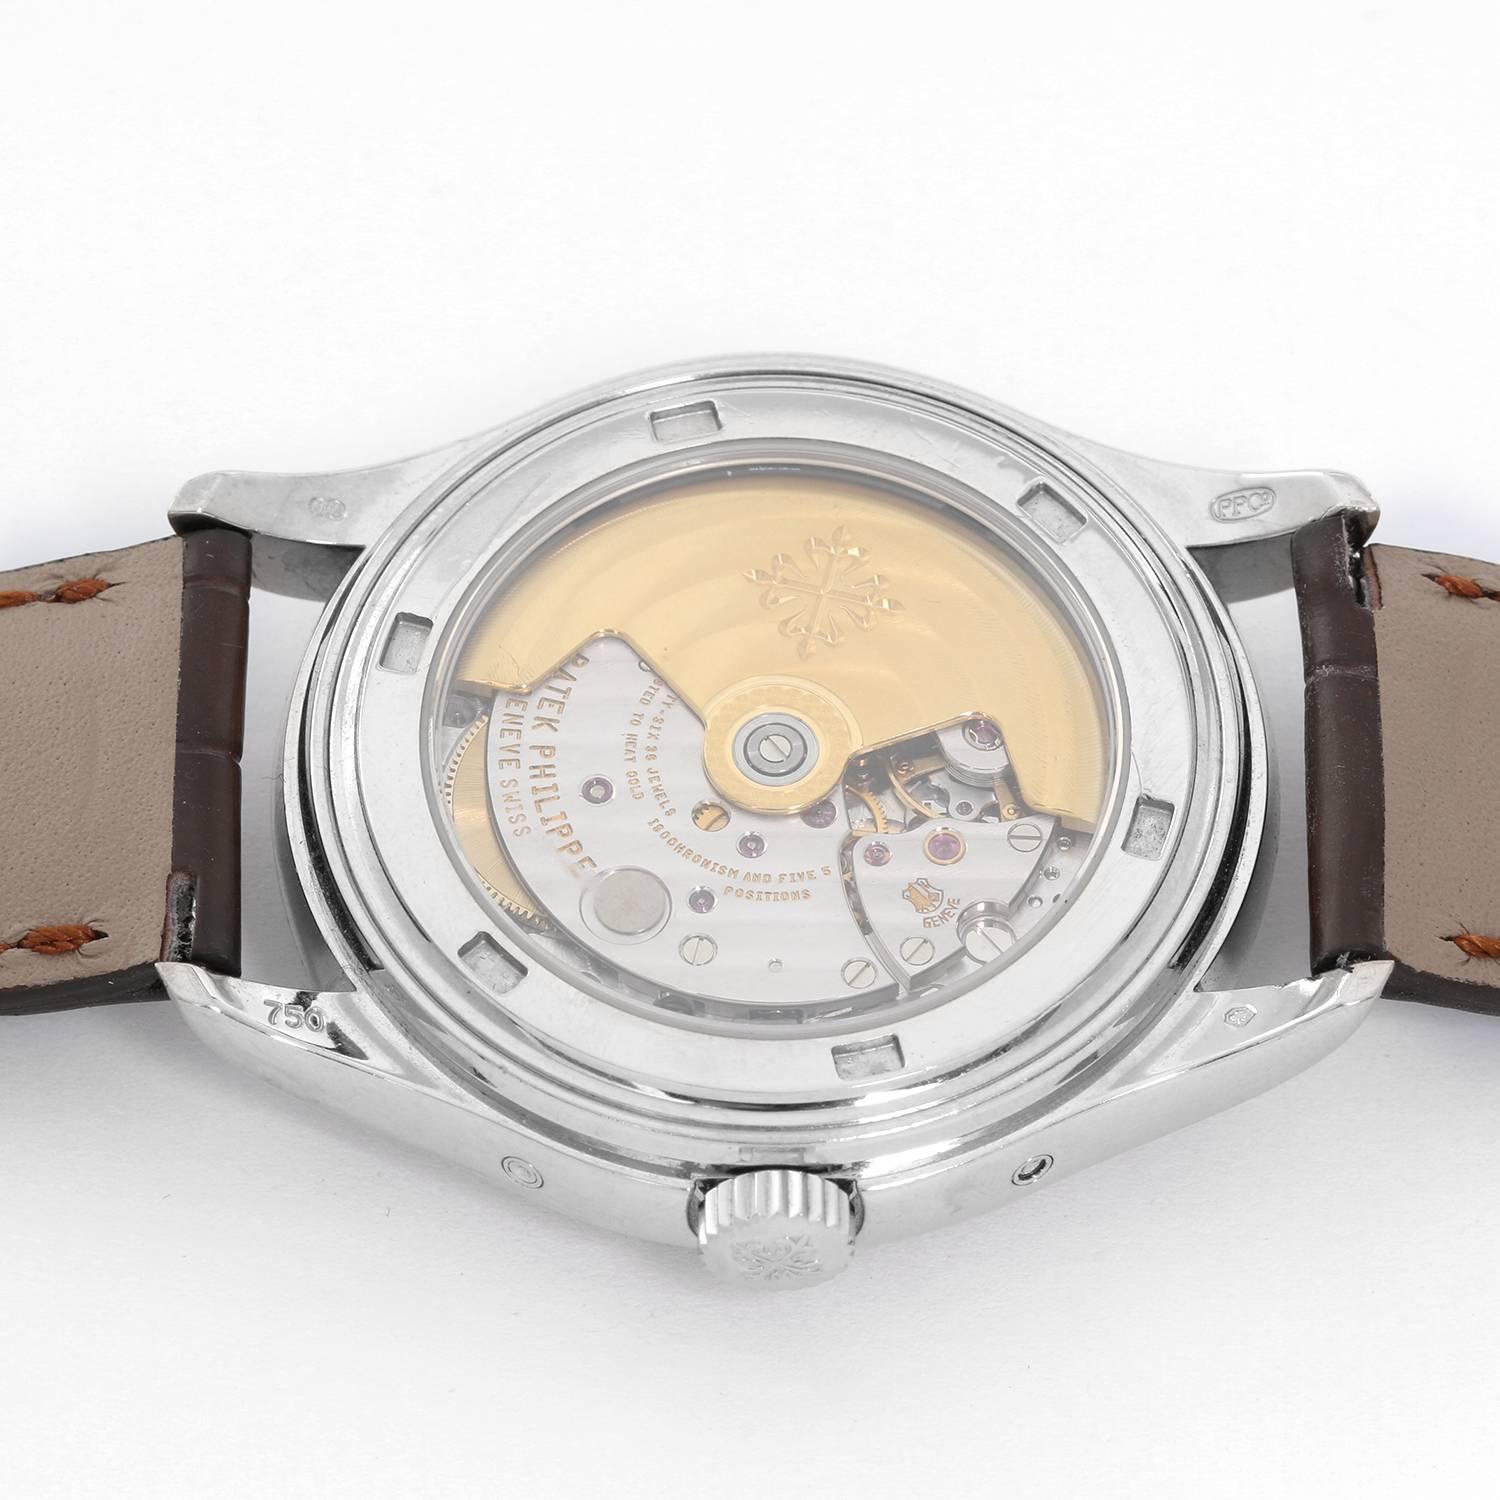 Contemporary Patek Philippe White Gold Annual Calendar Automatic Wristwatch Ref 5146G